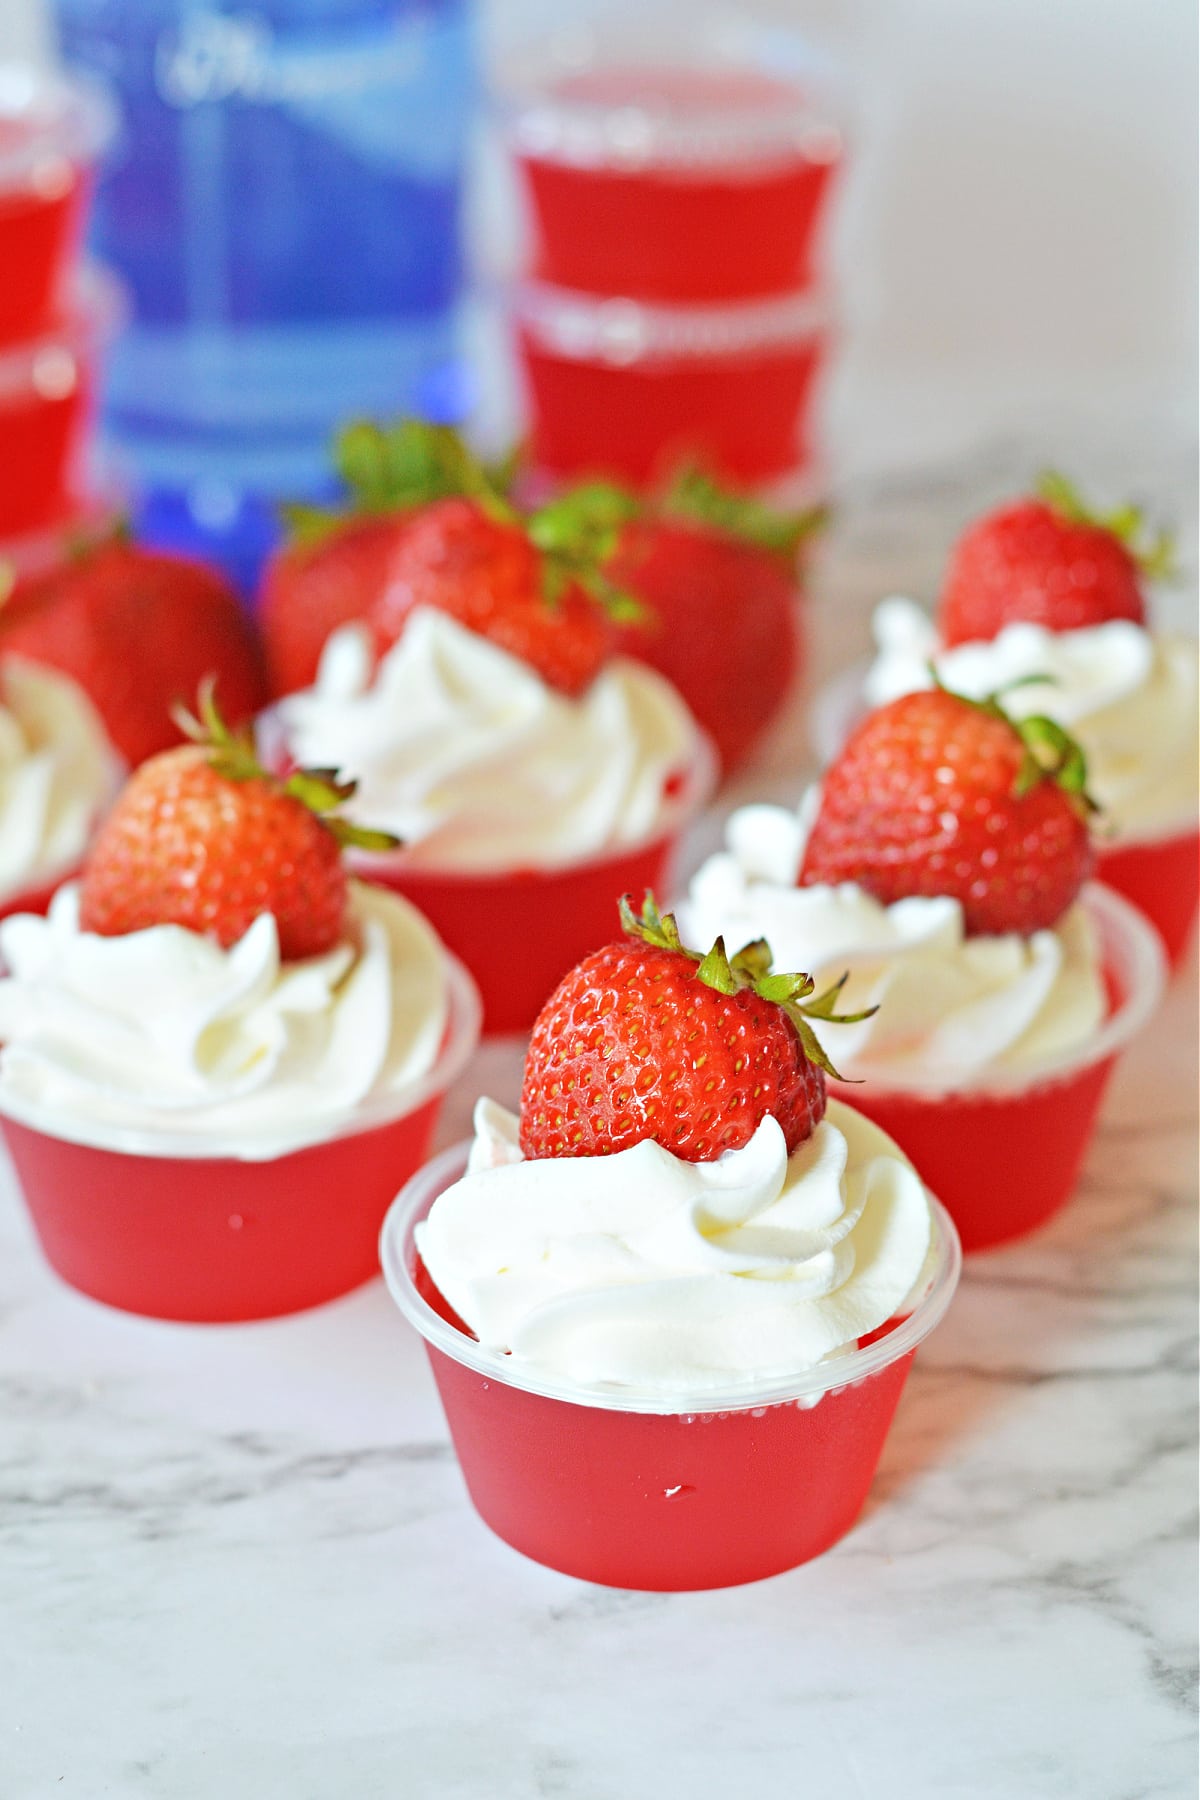 Pinnacle whipped cream vodka jello shots with strawberries